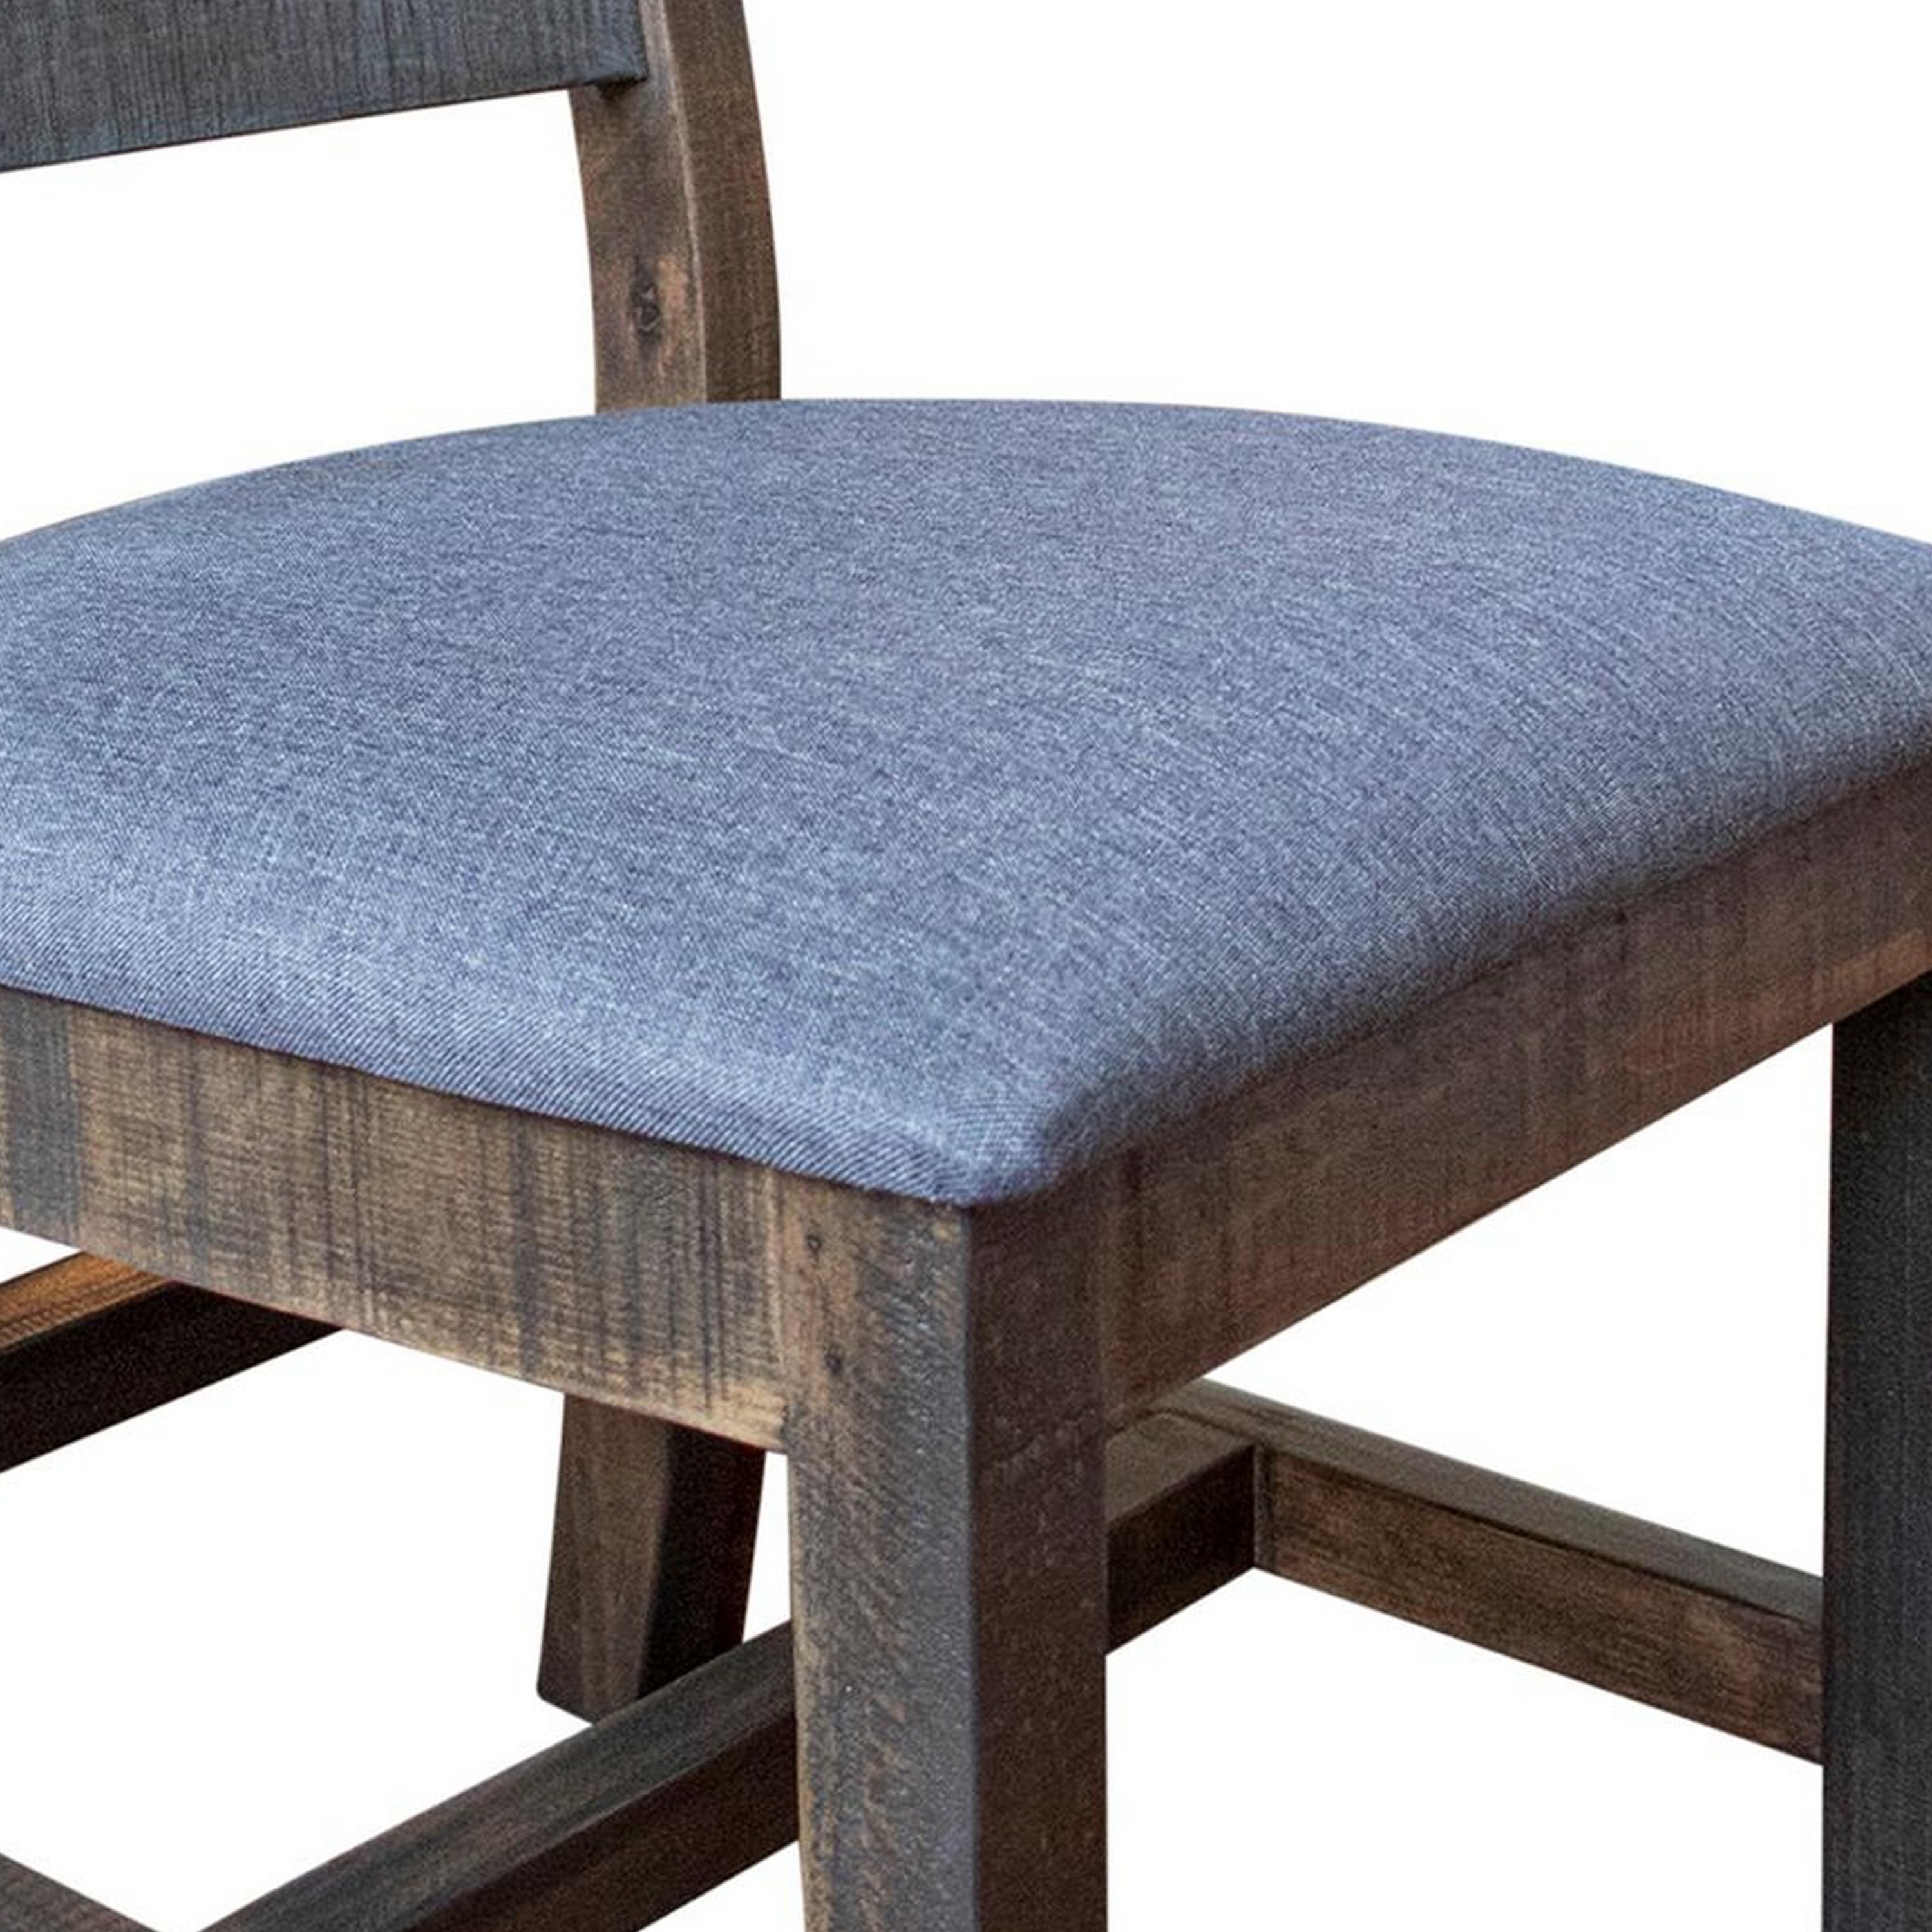 Amy 22 Inch Dining Chair, Polyester Seat Cushion, Pine Wood, Rustic Gray- Saltoro Sherpi